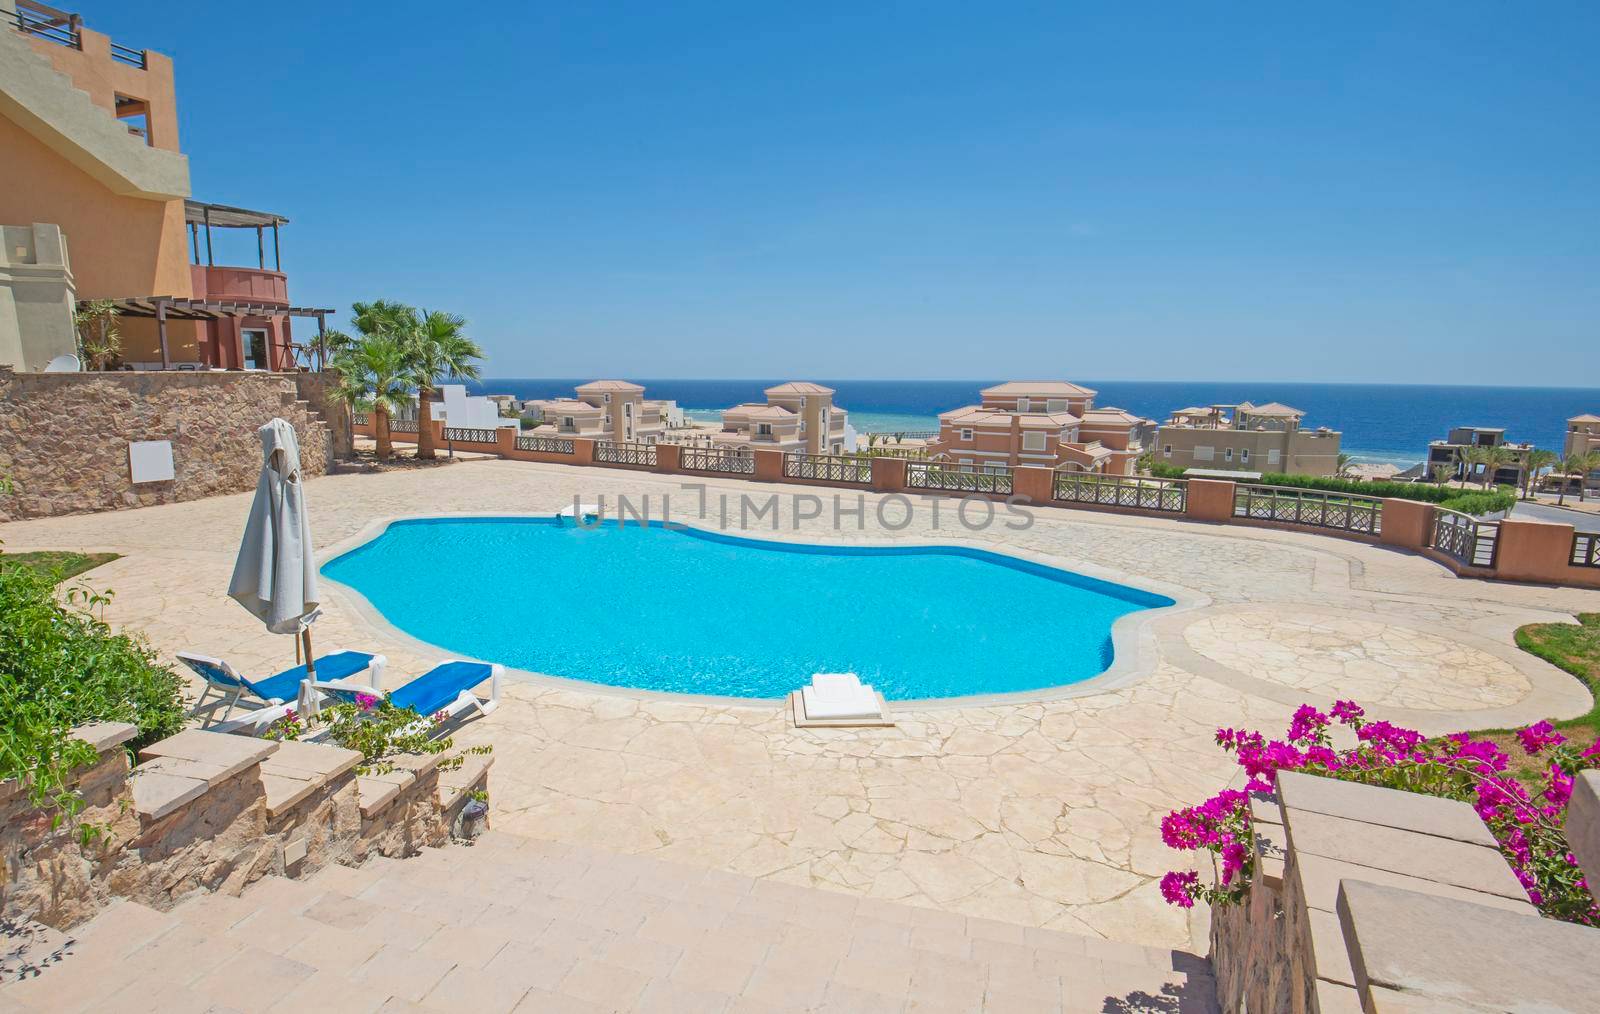 Outdoor swimming pool in a luxury tropical hotel resort by paulvinten